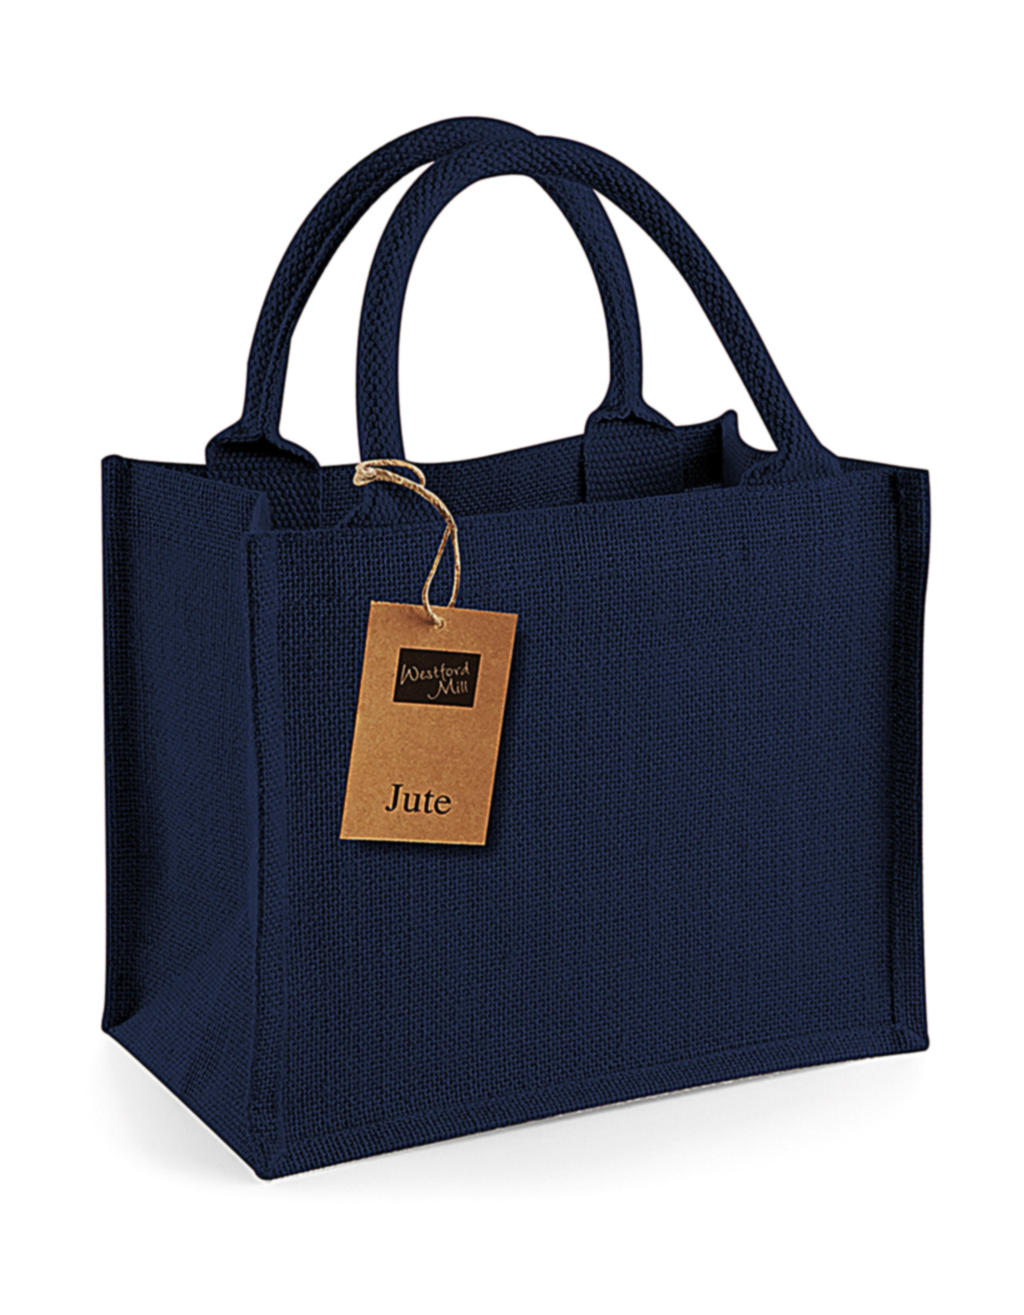  Jute Mini Gift Bag in Farbe Navy/Navy